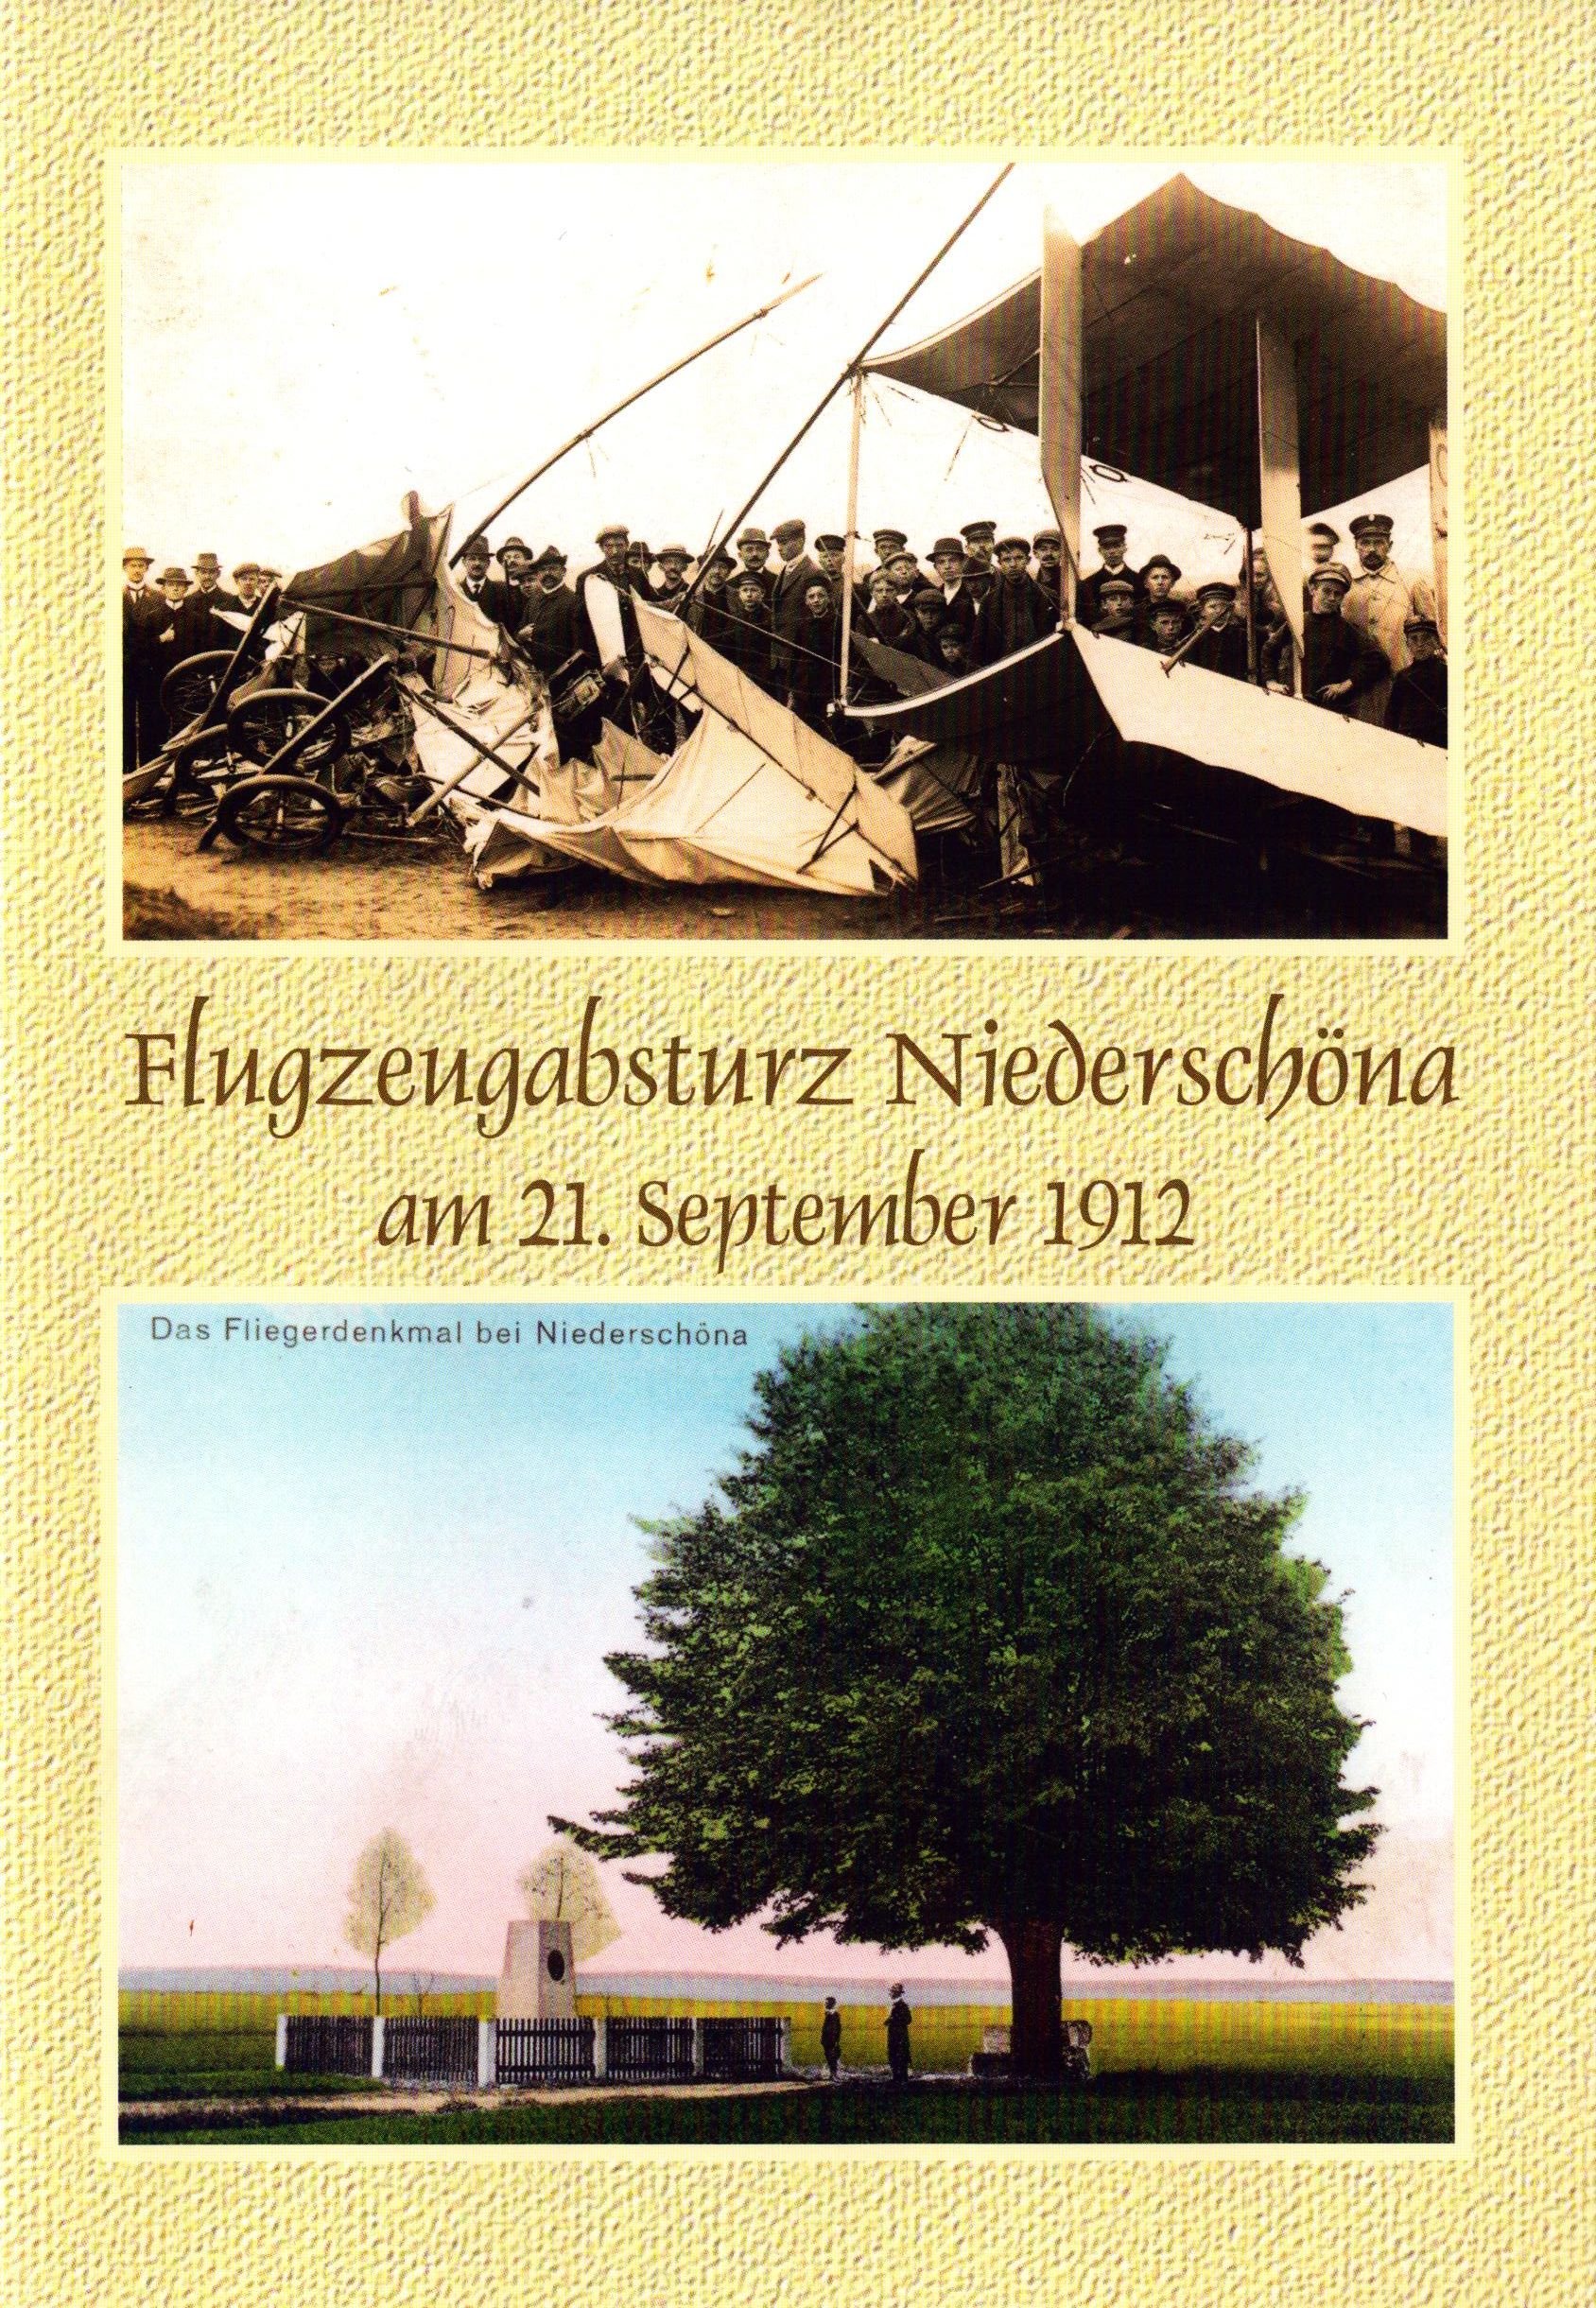 Flugzeugabsturz Niederschöna am 21. September 1912 (Archiv SAXONIA-FREIBERG-STIFTUNG CC BY-NC-SA)